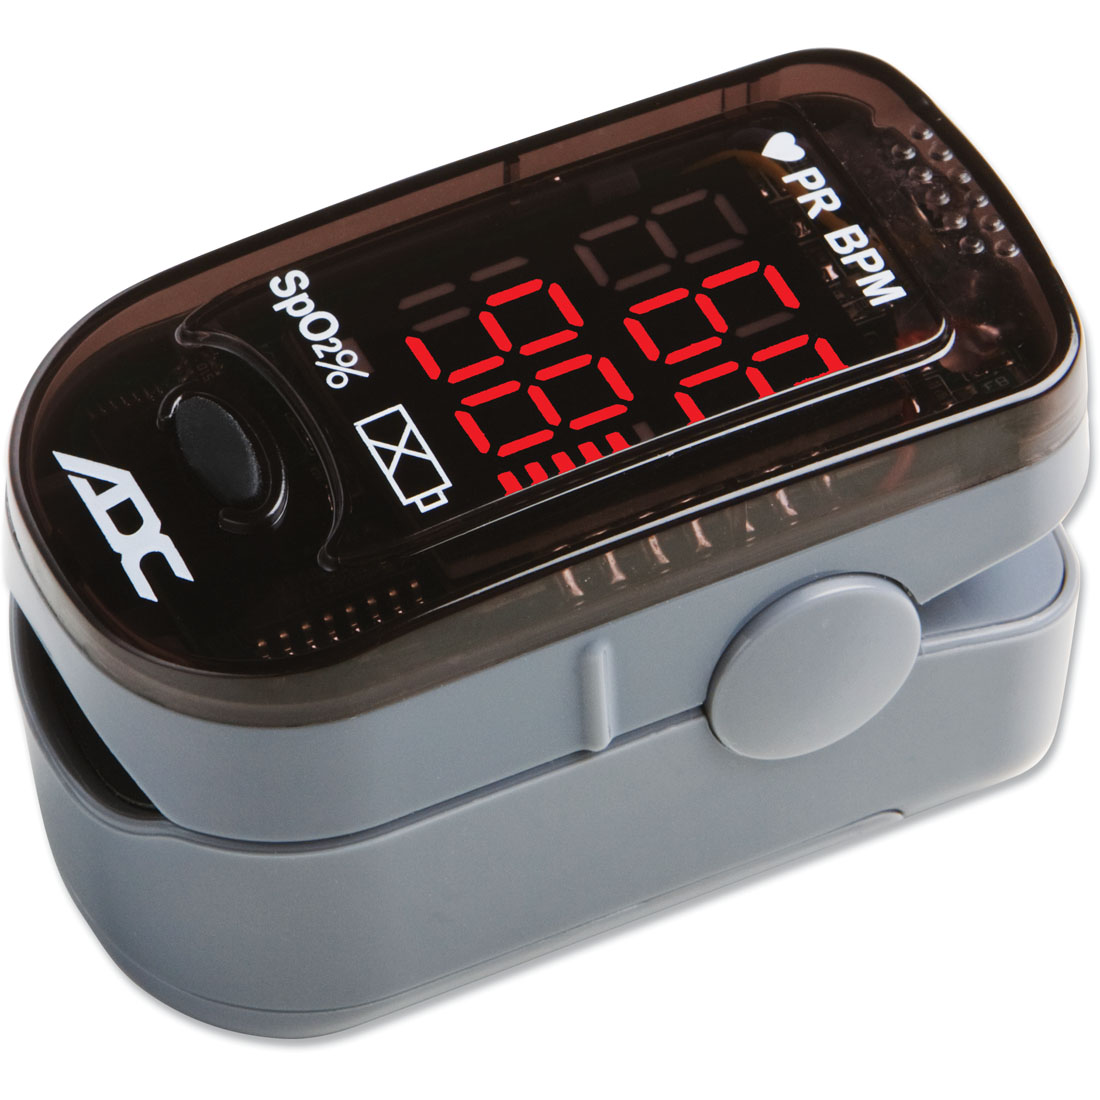 Pulse Oximeter Digital Fingertip-ADC